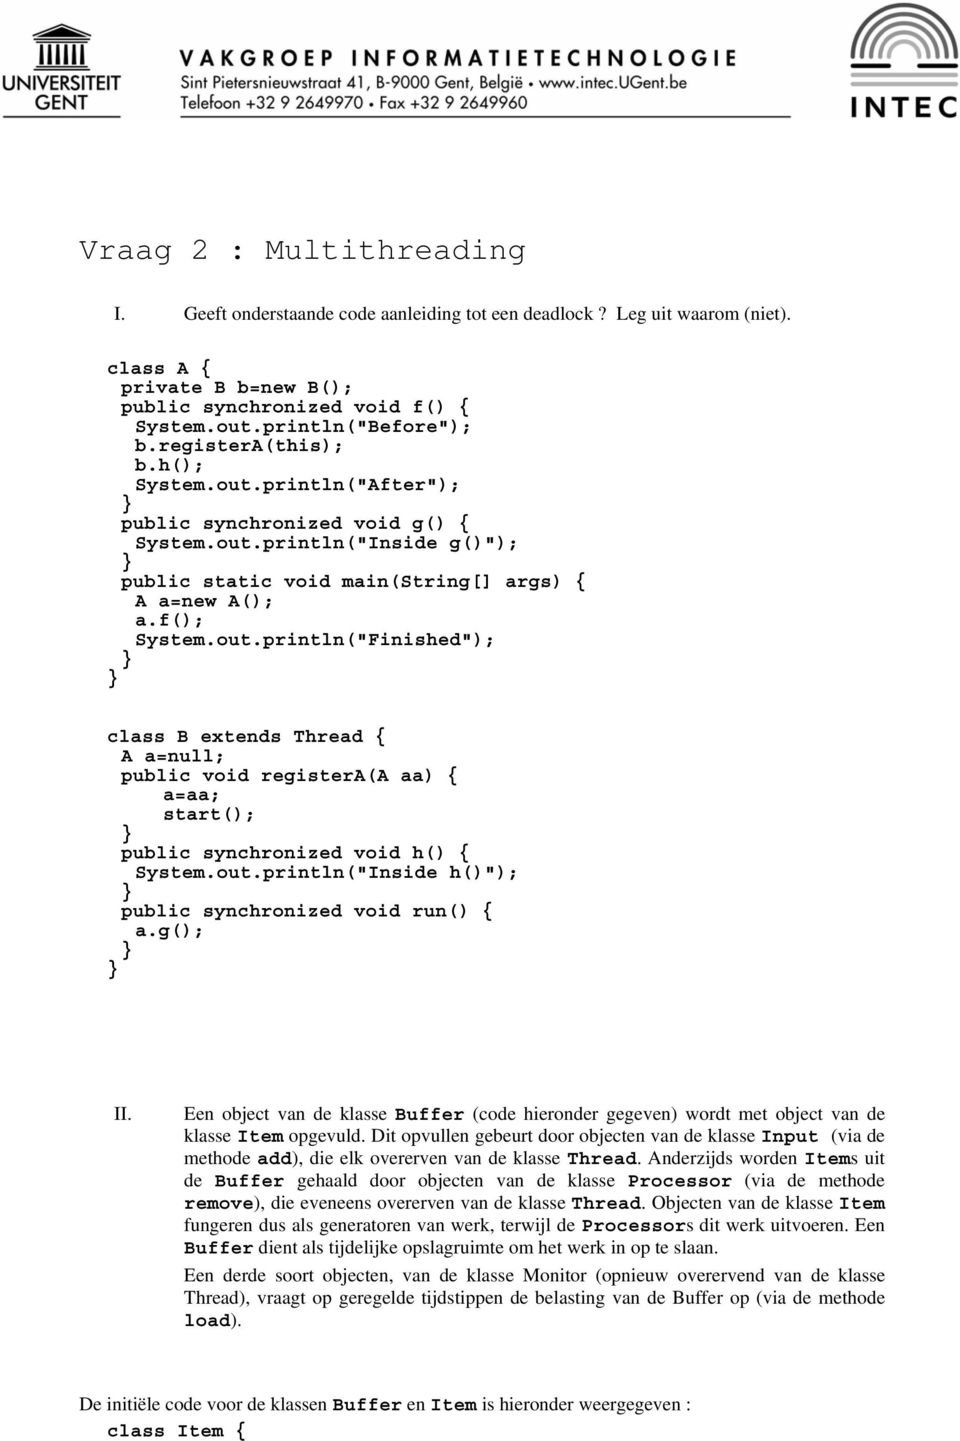 out.println("Inside h()"); public synchronized void run() { a.g(); II. Een object van de klasse Buffer (code hieronder gegeven) wordt met object van de klasse Item opgevuld.